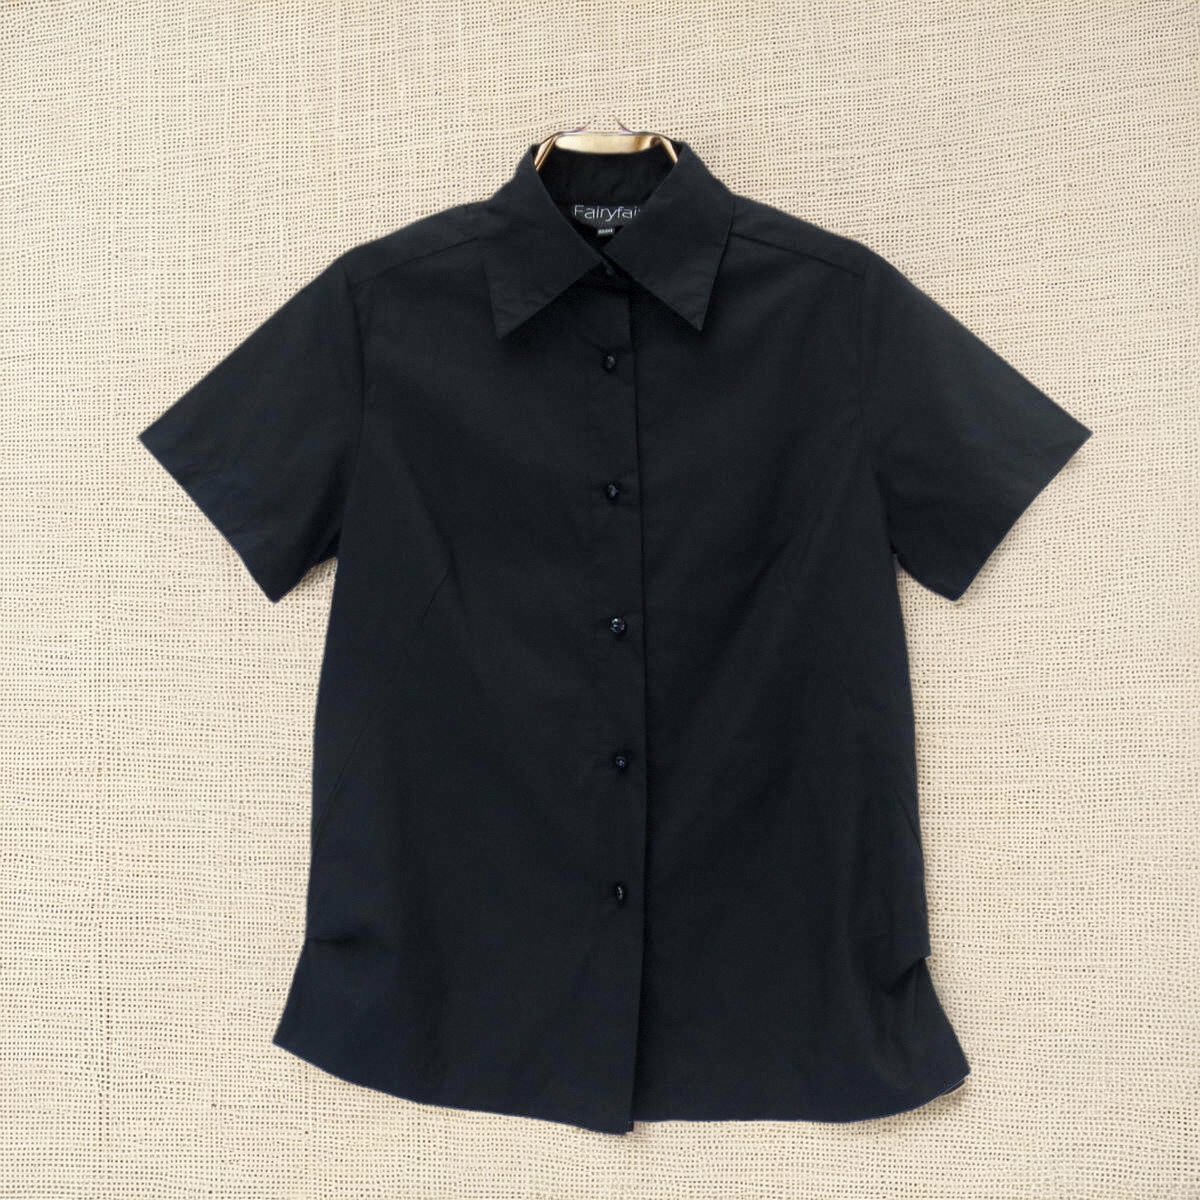 FAIRYFAIR正品高端系列黑色纯棉尖领职业通勤短袖衬衣衬衫女夏季